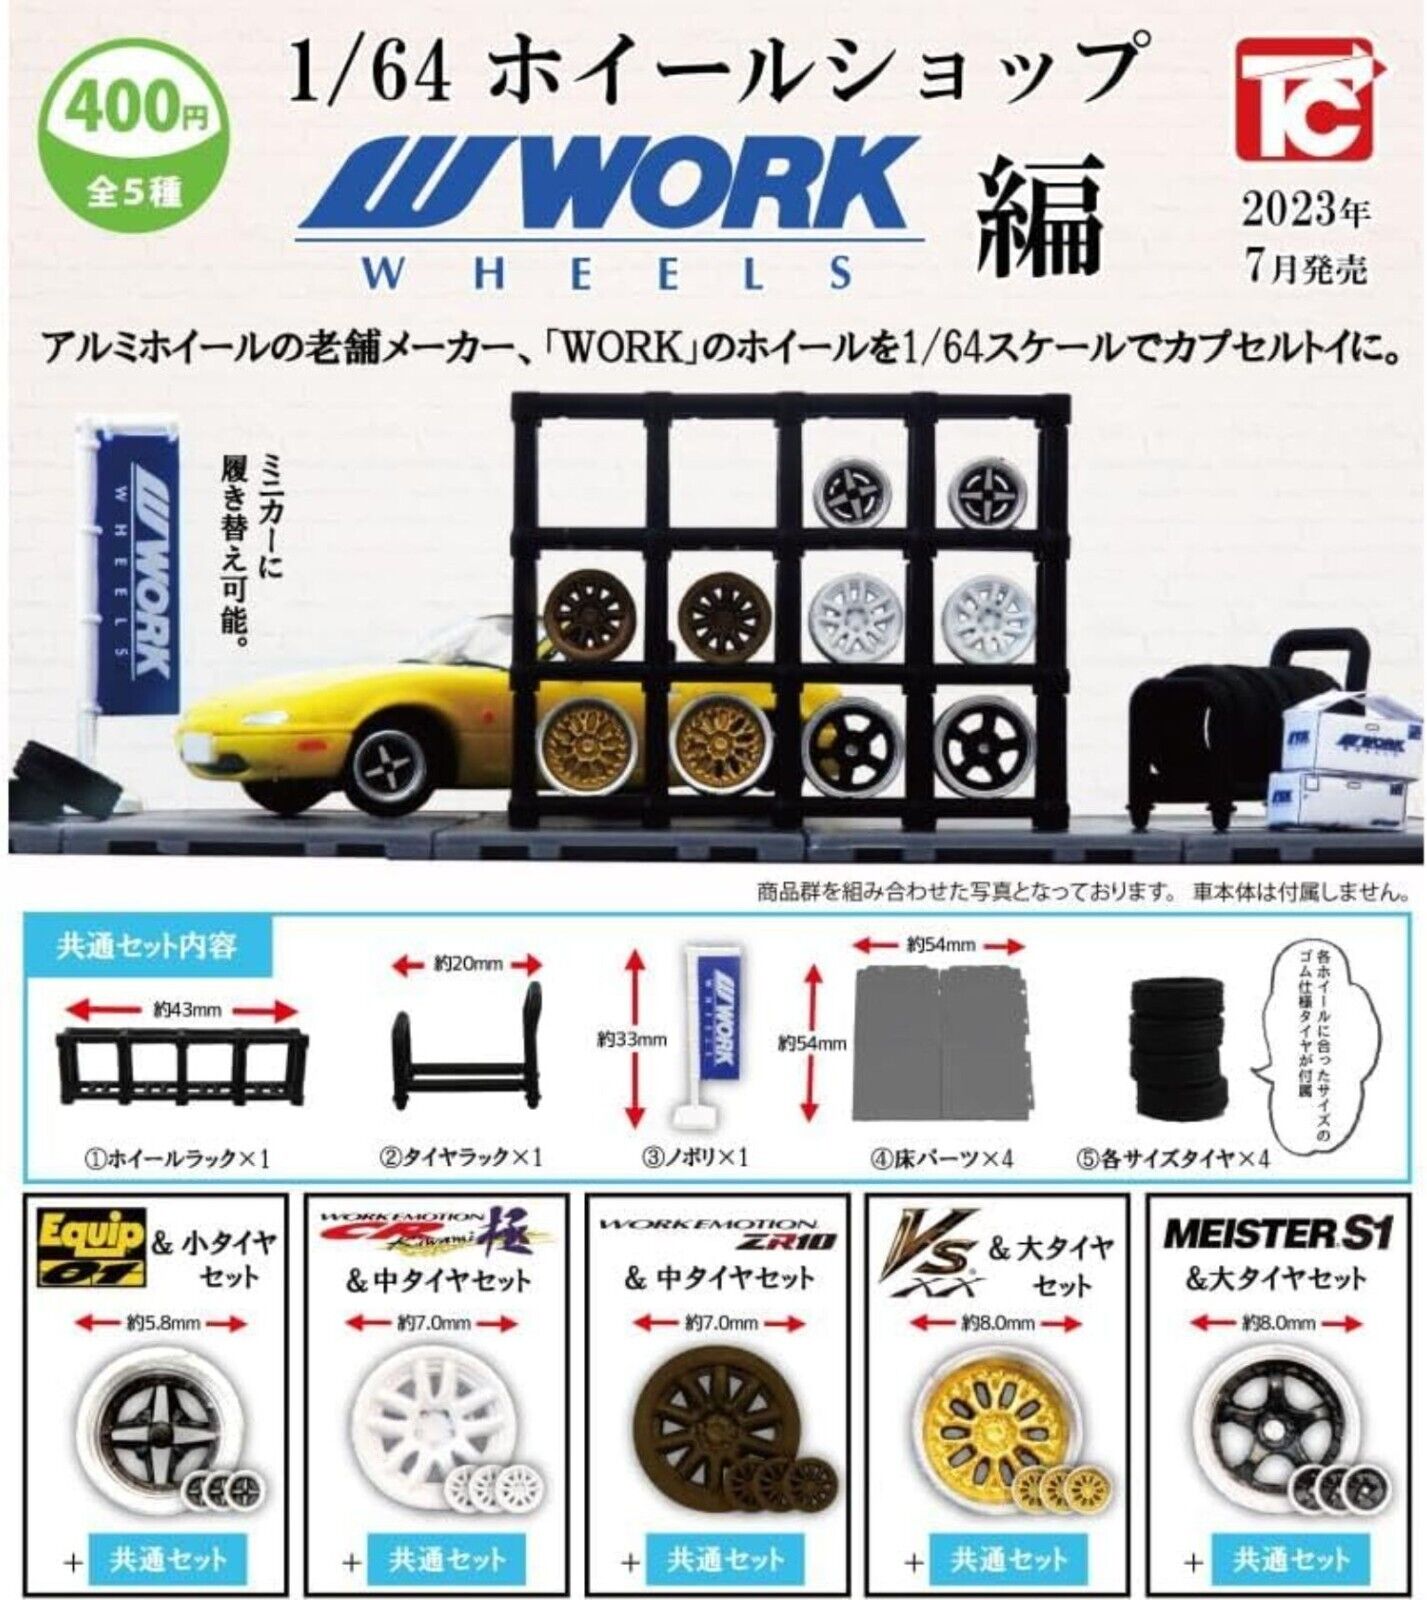 1/64 Wheel Shop WORK Edition Mascot Capsule Toy 5 Types Full Comp Set Gacha New